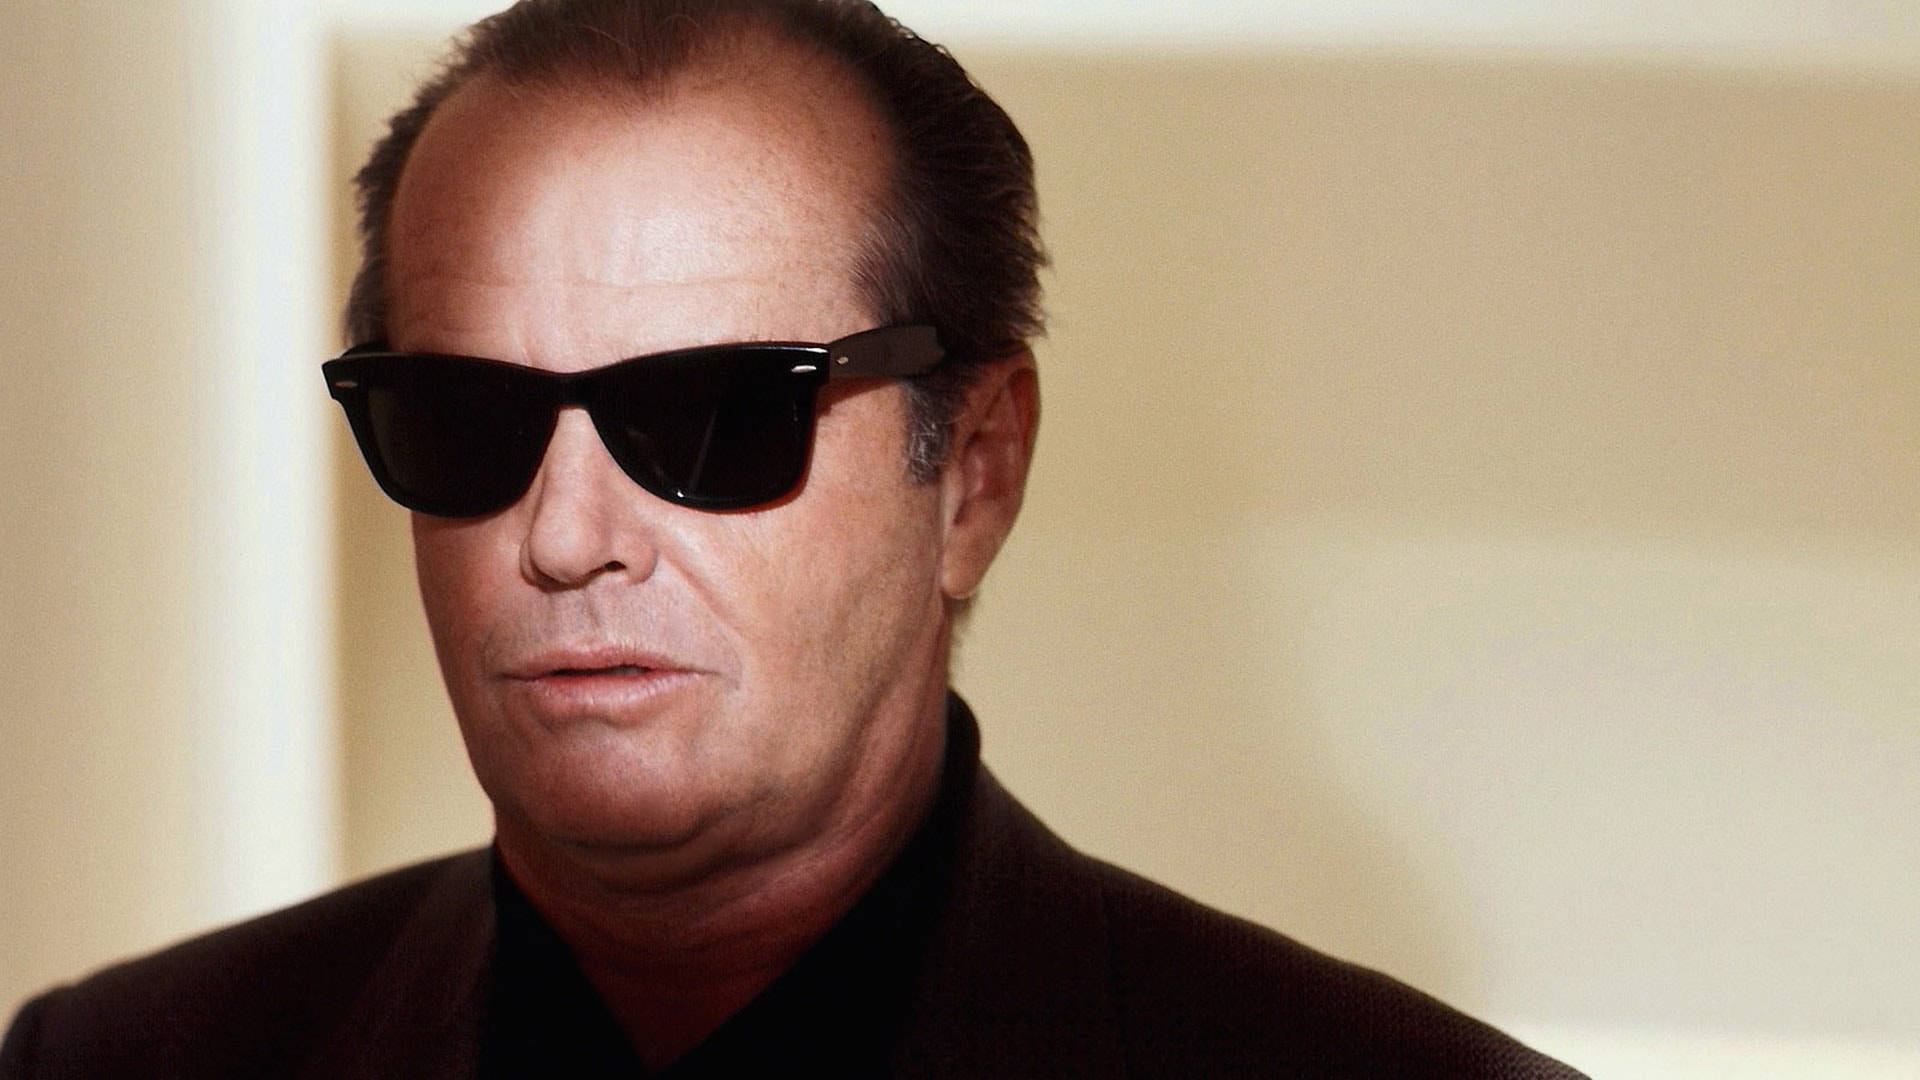 Jack Nicholson Sunglasses American Actor